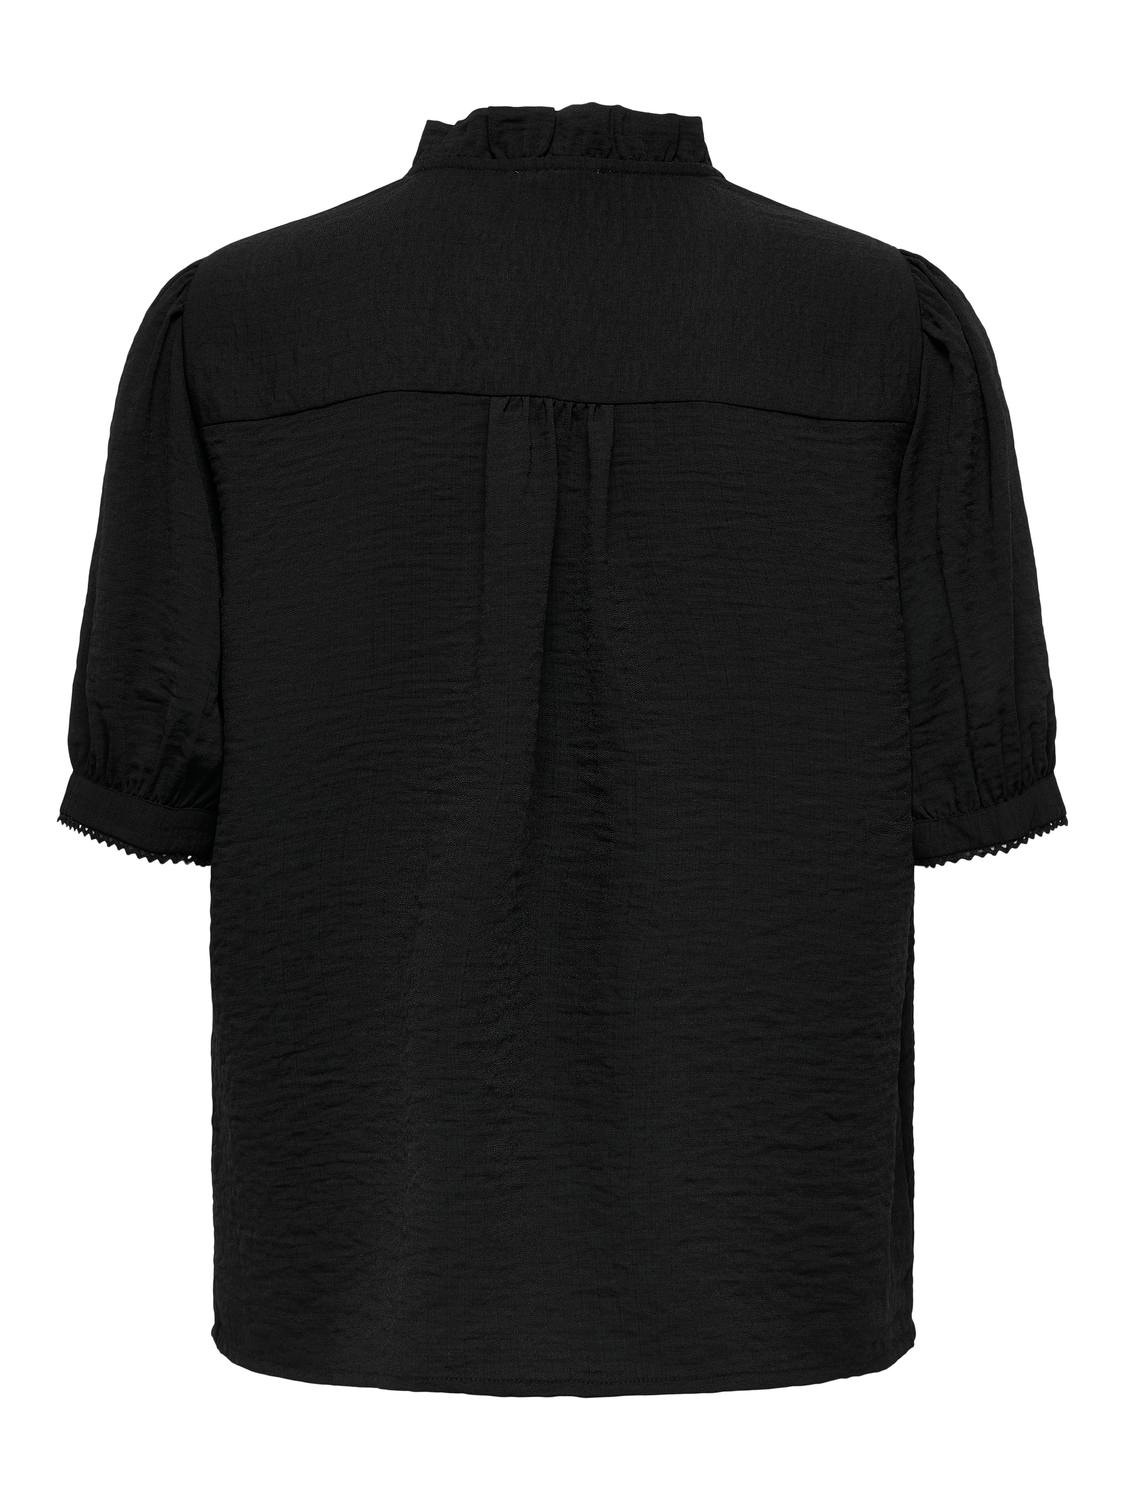 ONLY Normal geschnitten Hemdkragen Ärmelbündchen mit Spitze Hemd -Black - 15336224